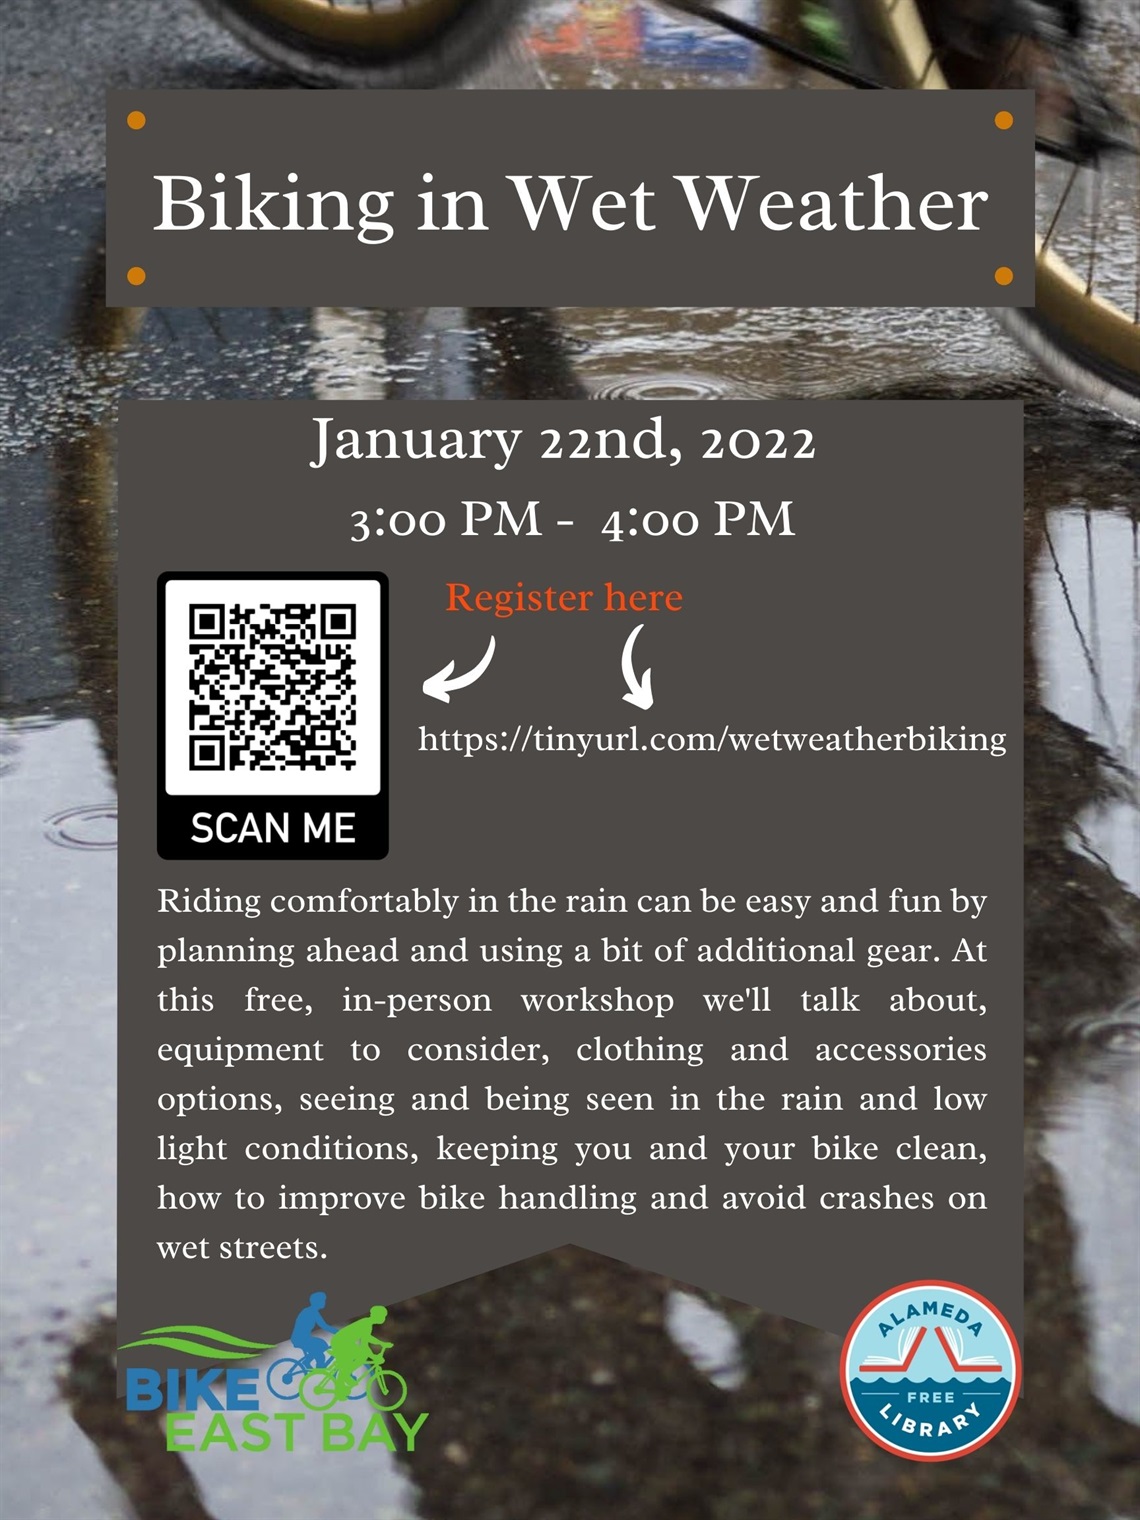 Biking in Wet Weather - Poster.jpg